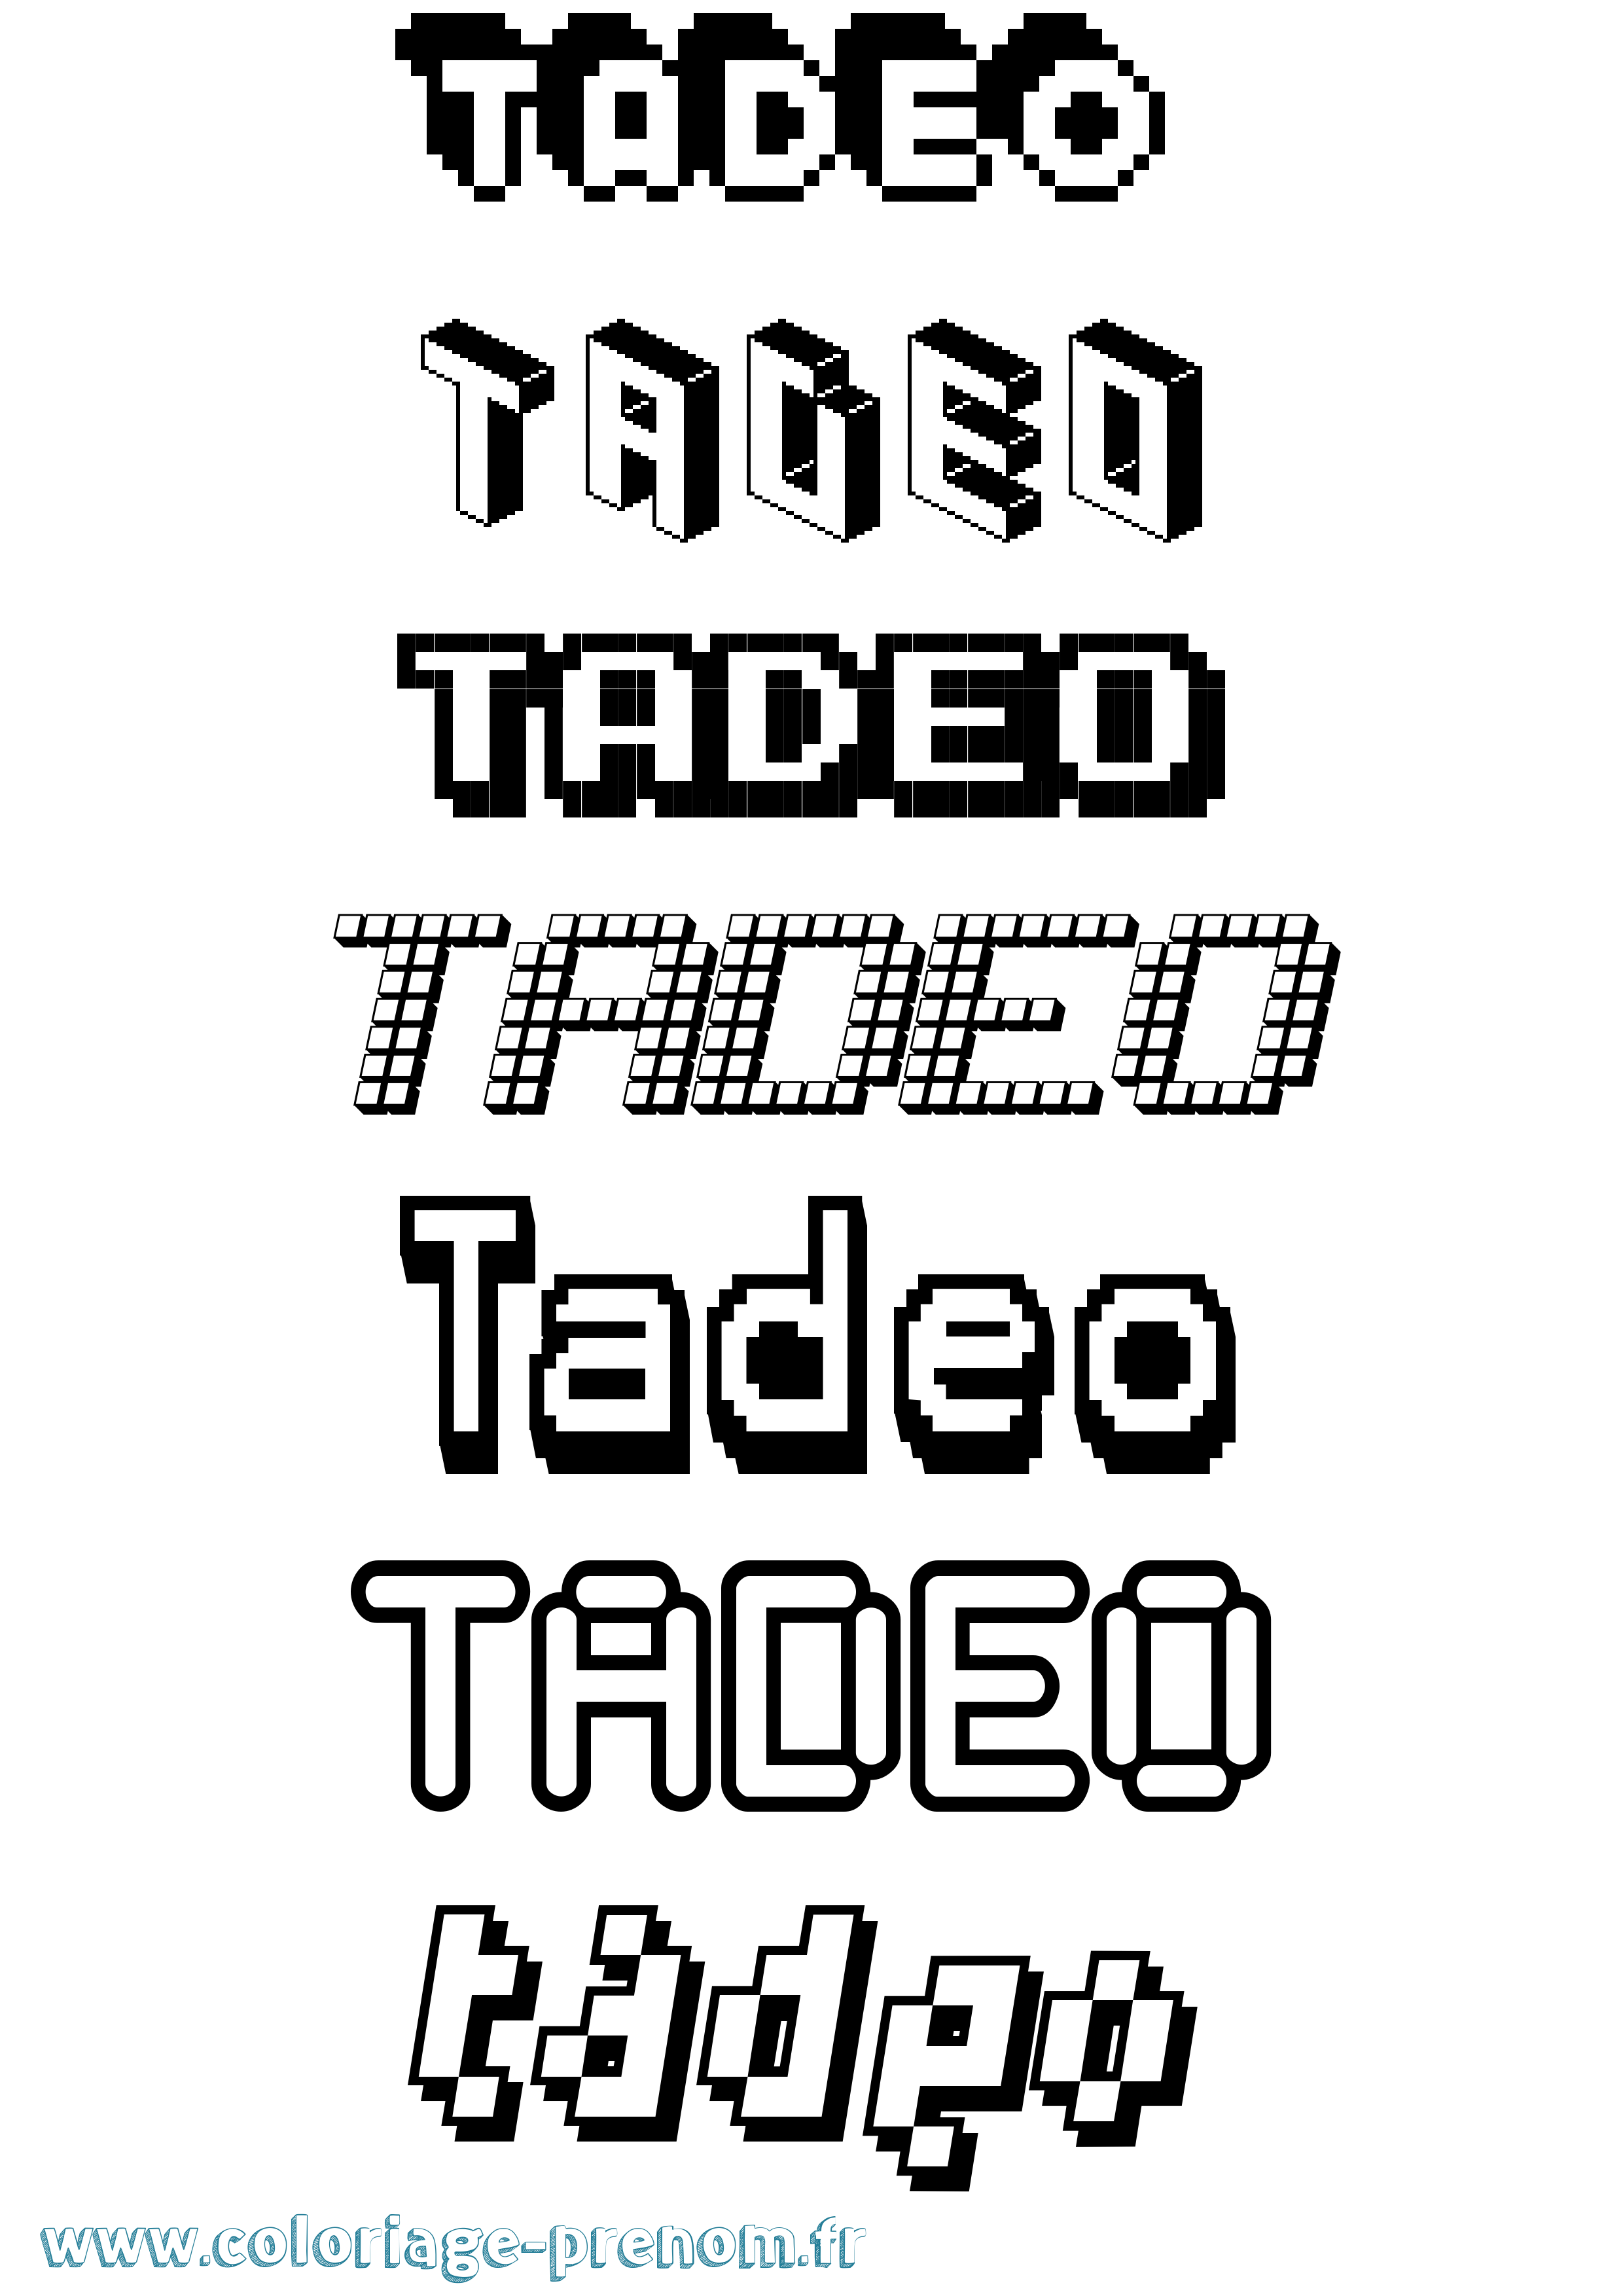 Coloriage prénom Tadeo Pixel